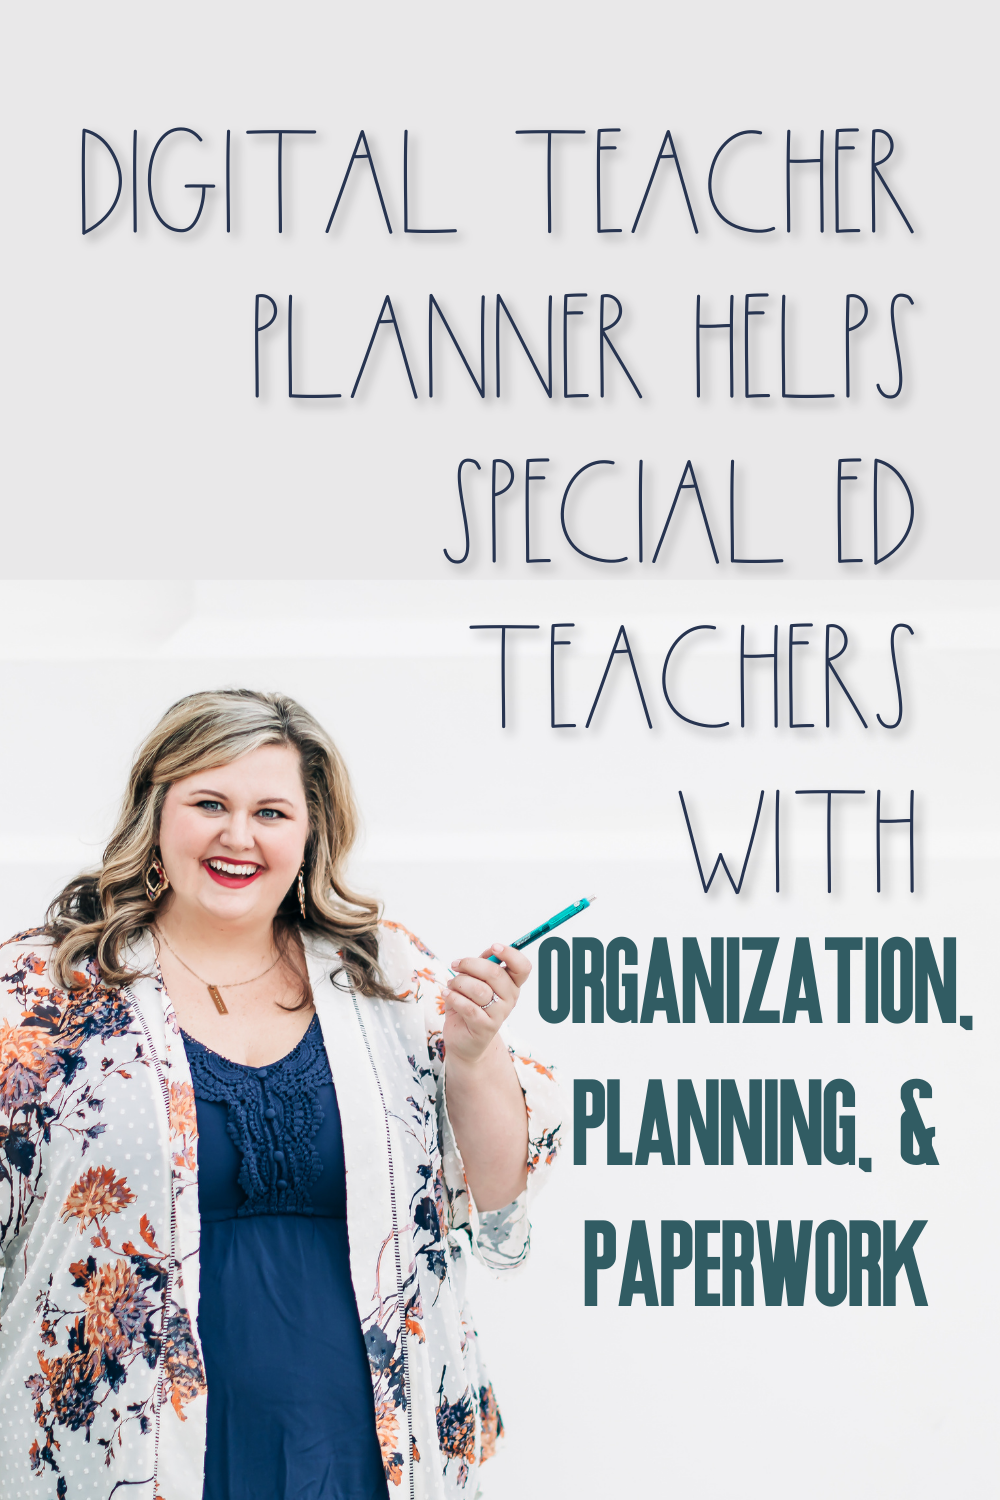 special-education-teacher-planner